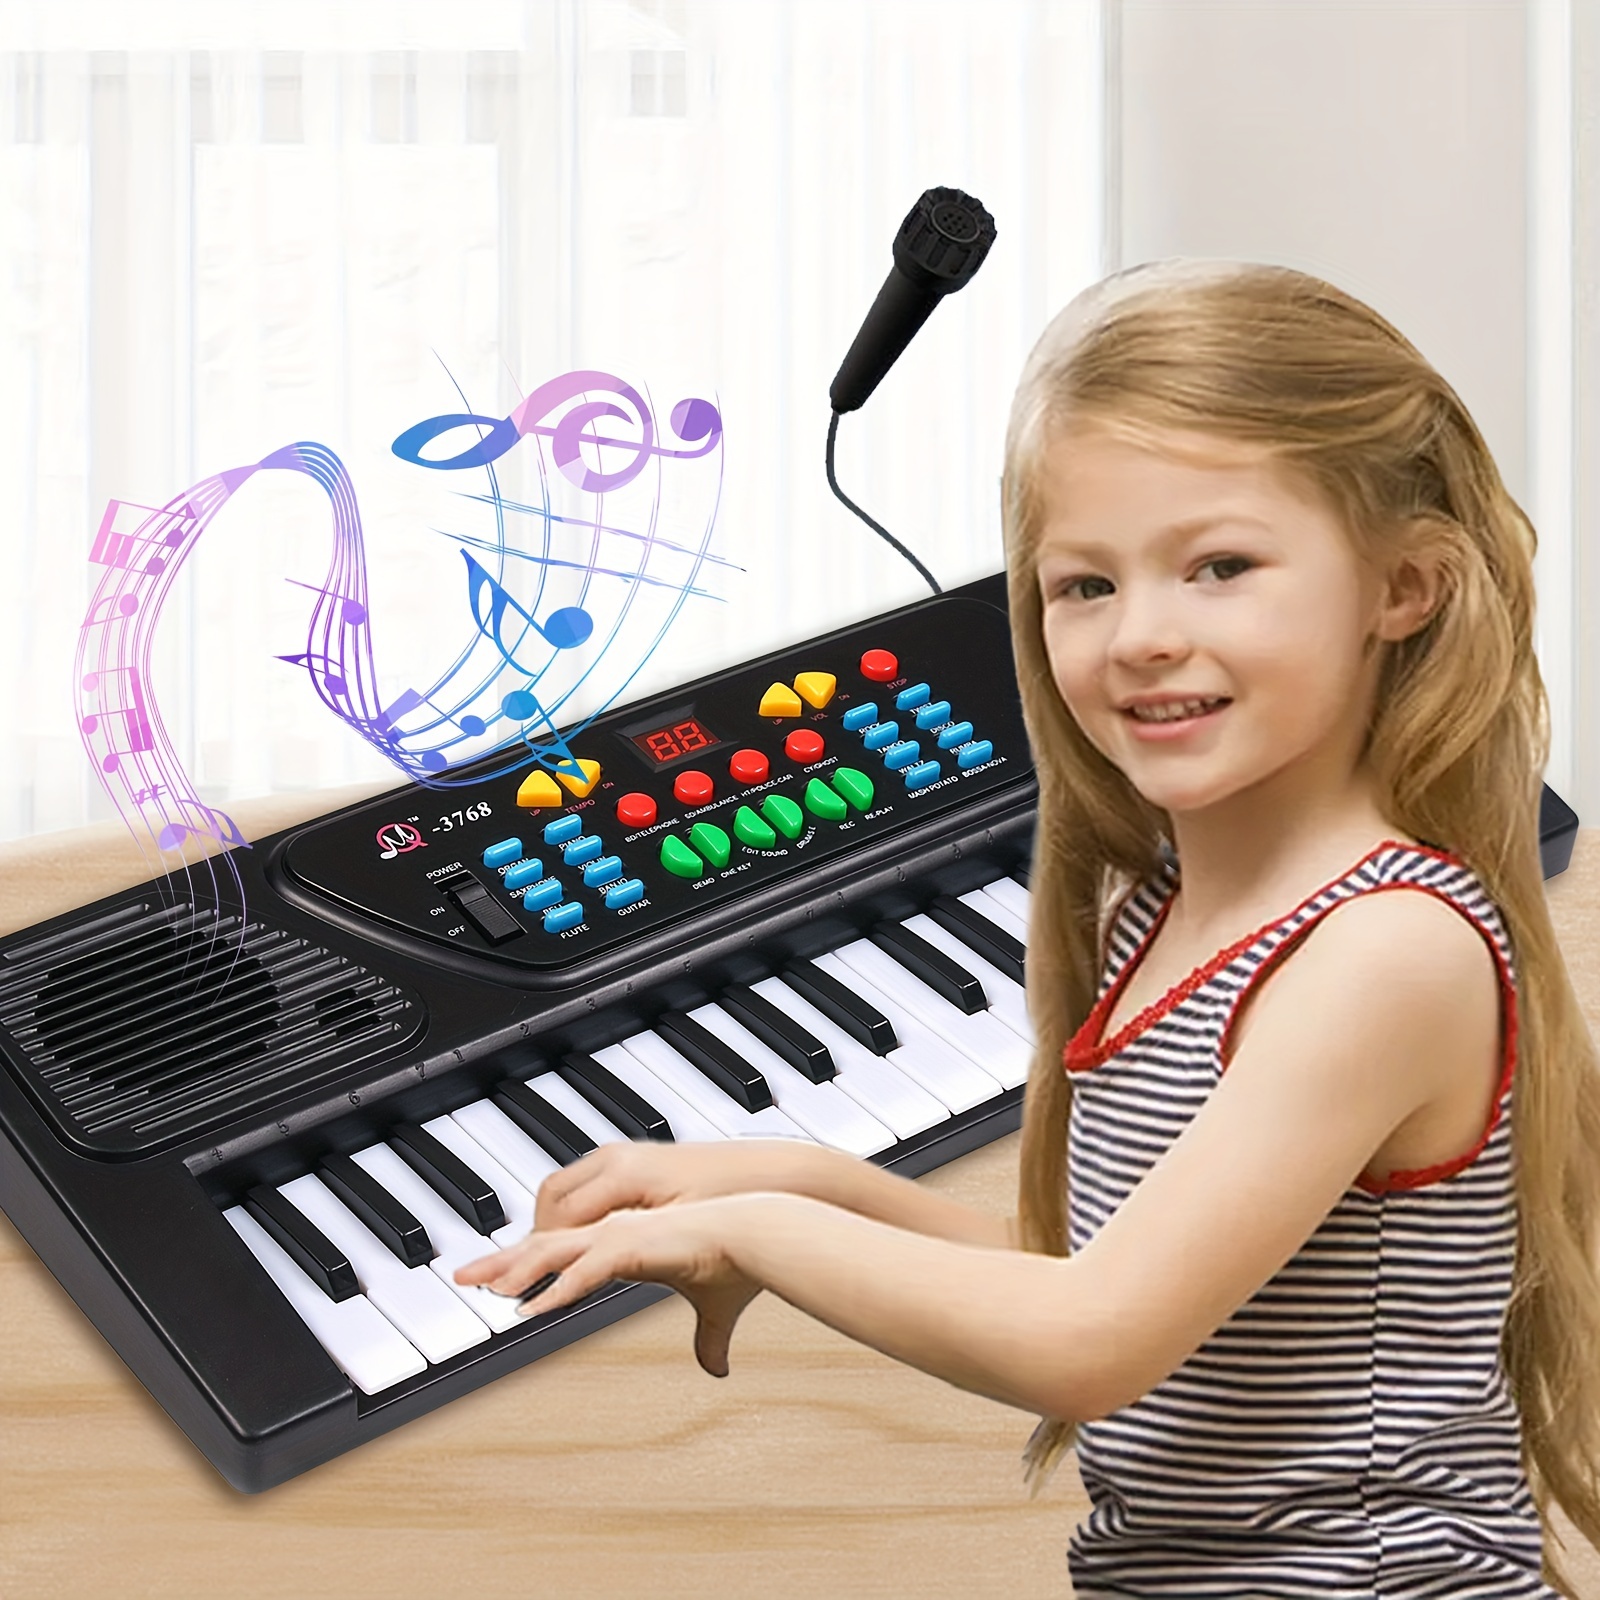 Piano Electronique Pour Enfant - Gixcor